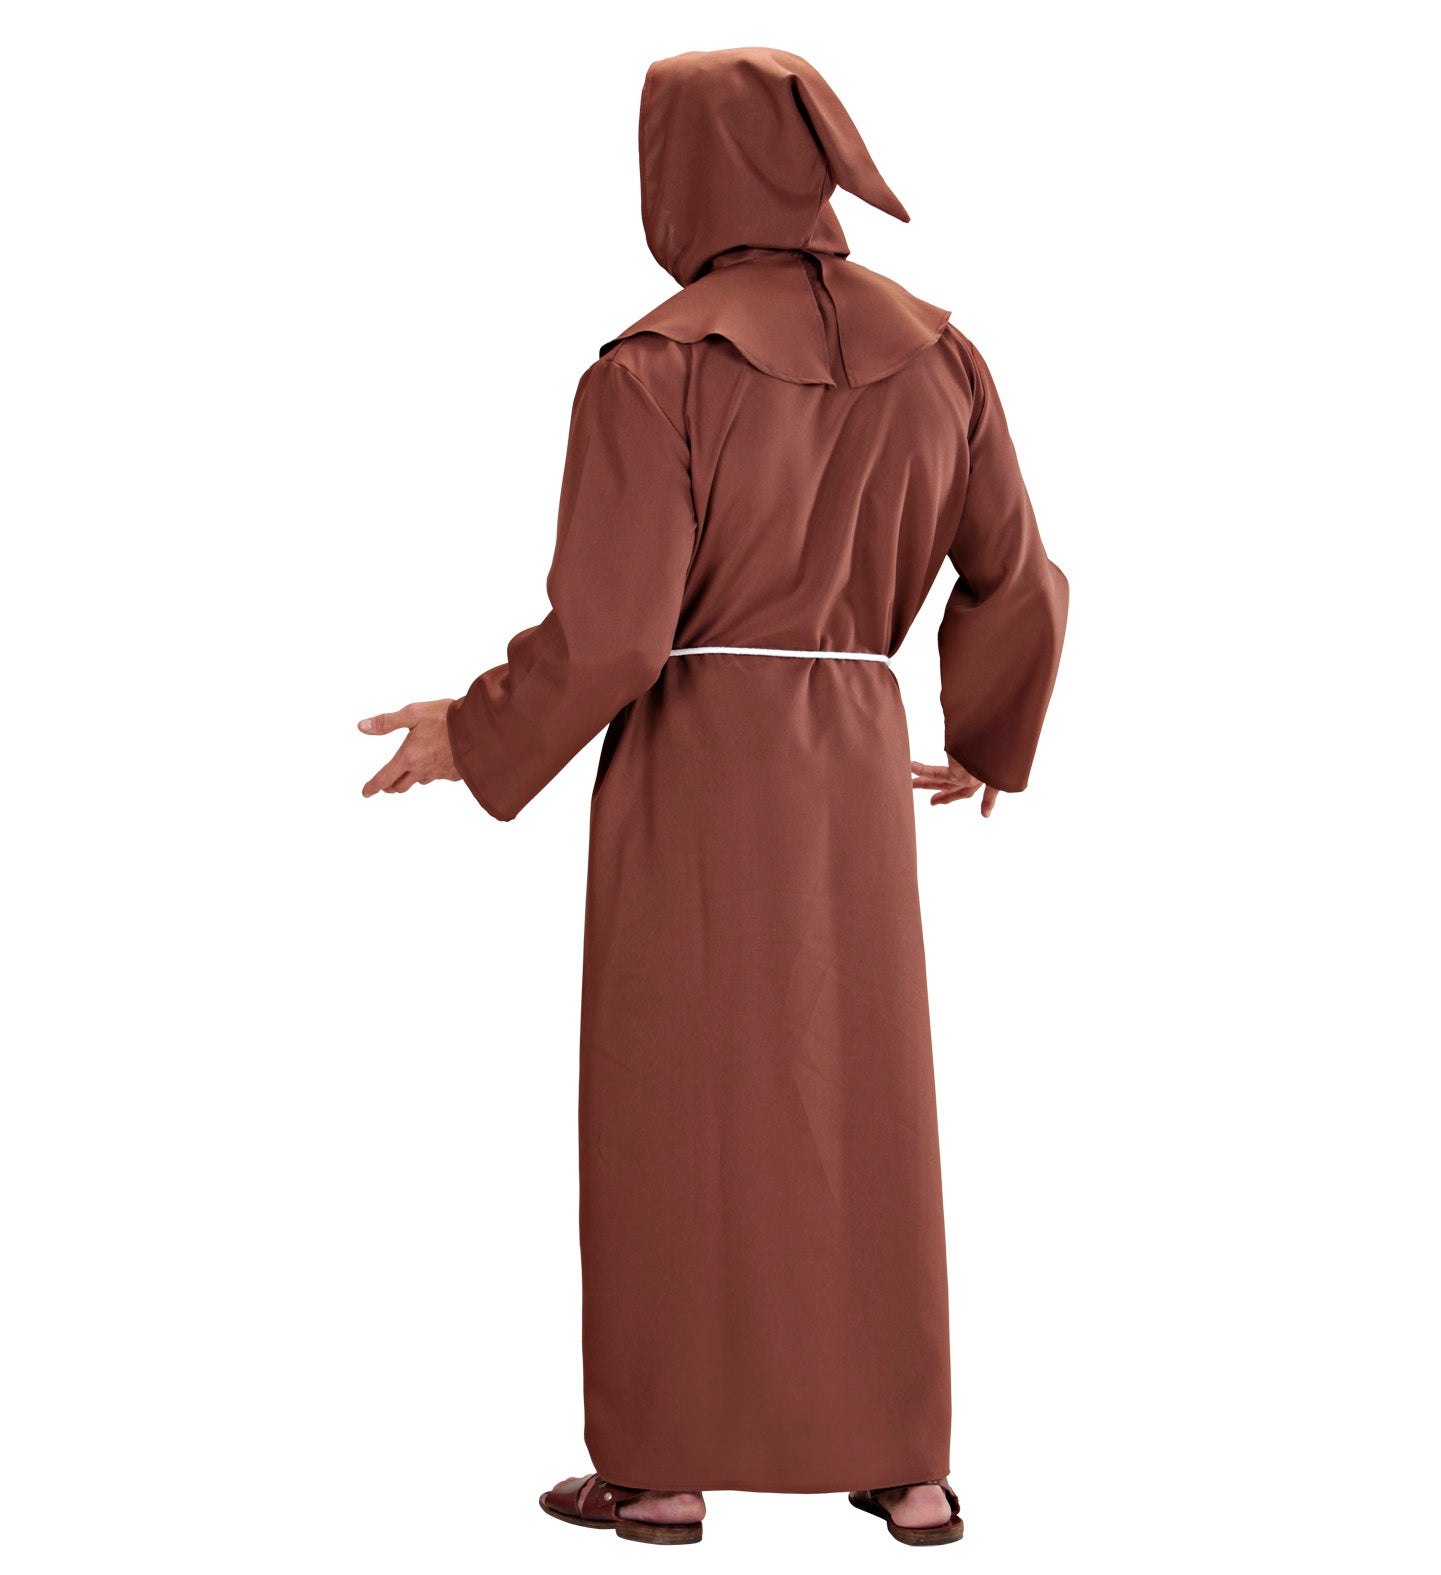 Capuchin Monk Costume rear